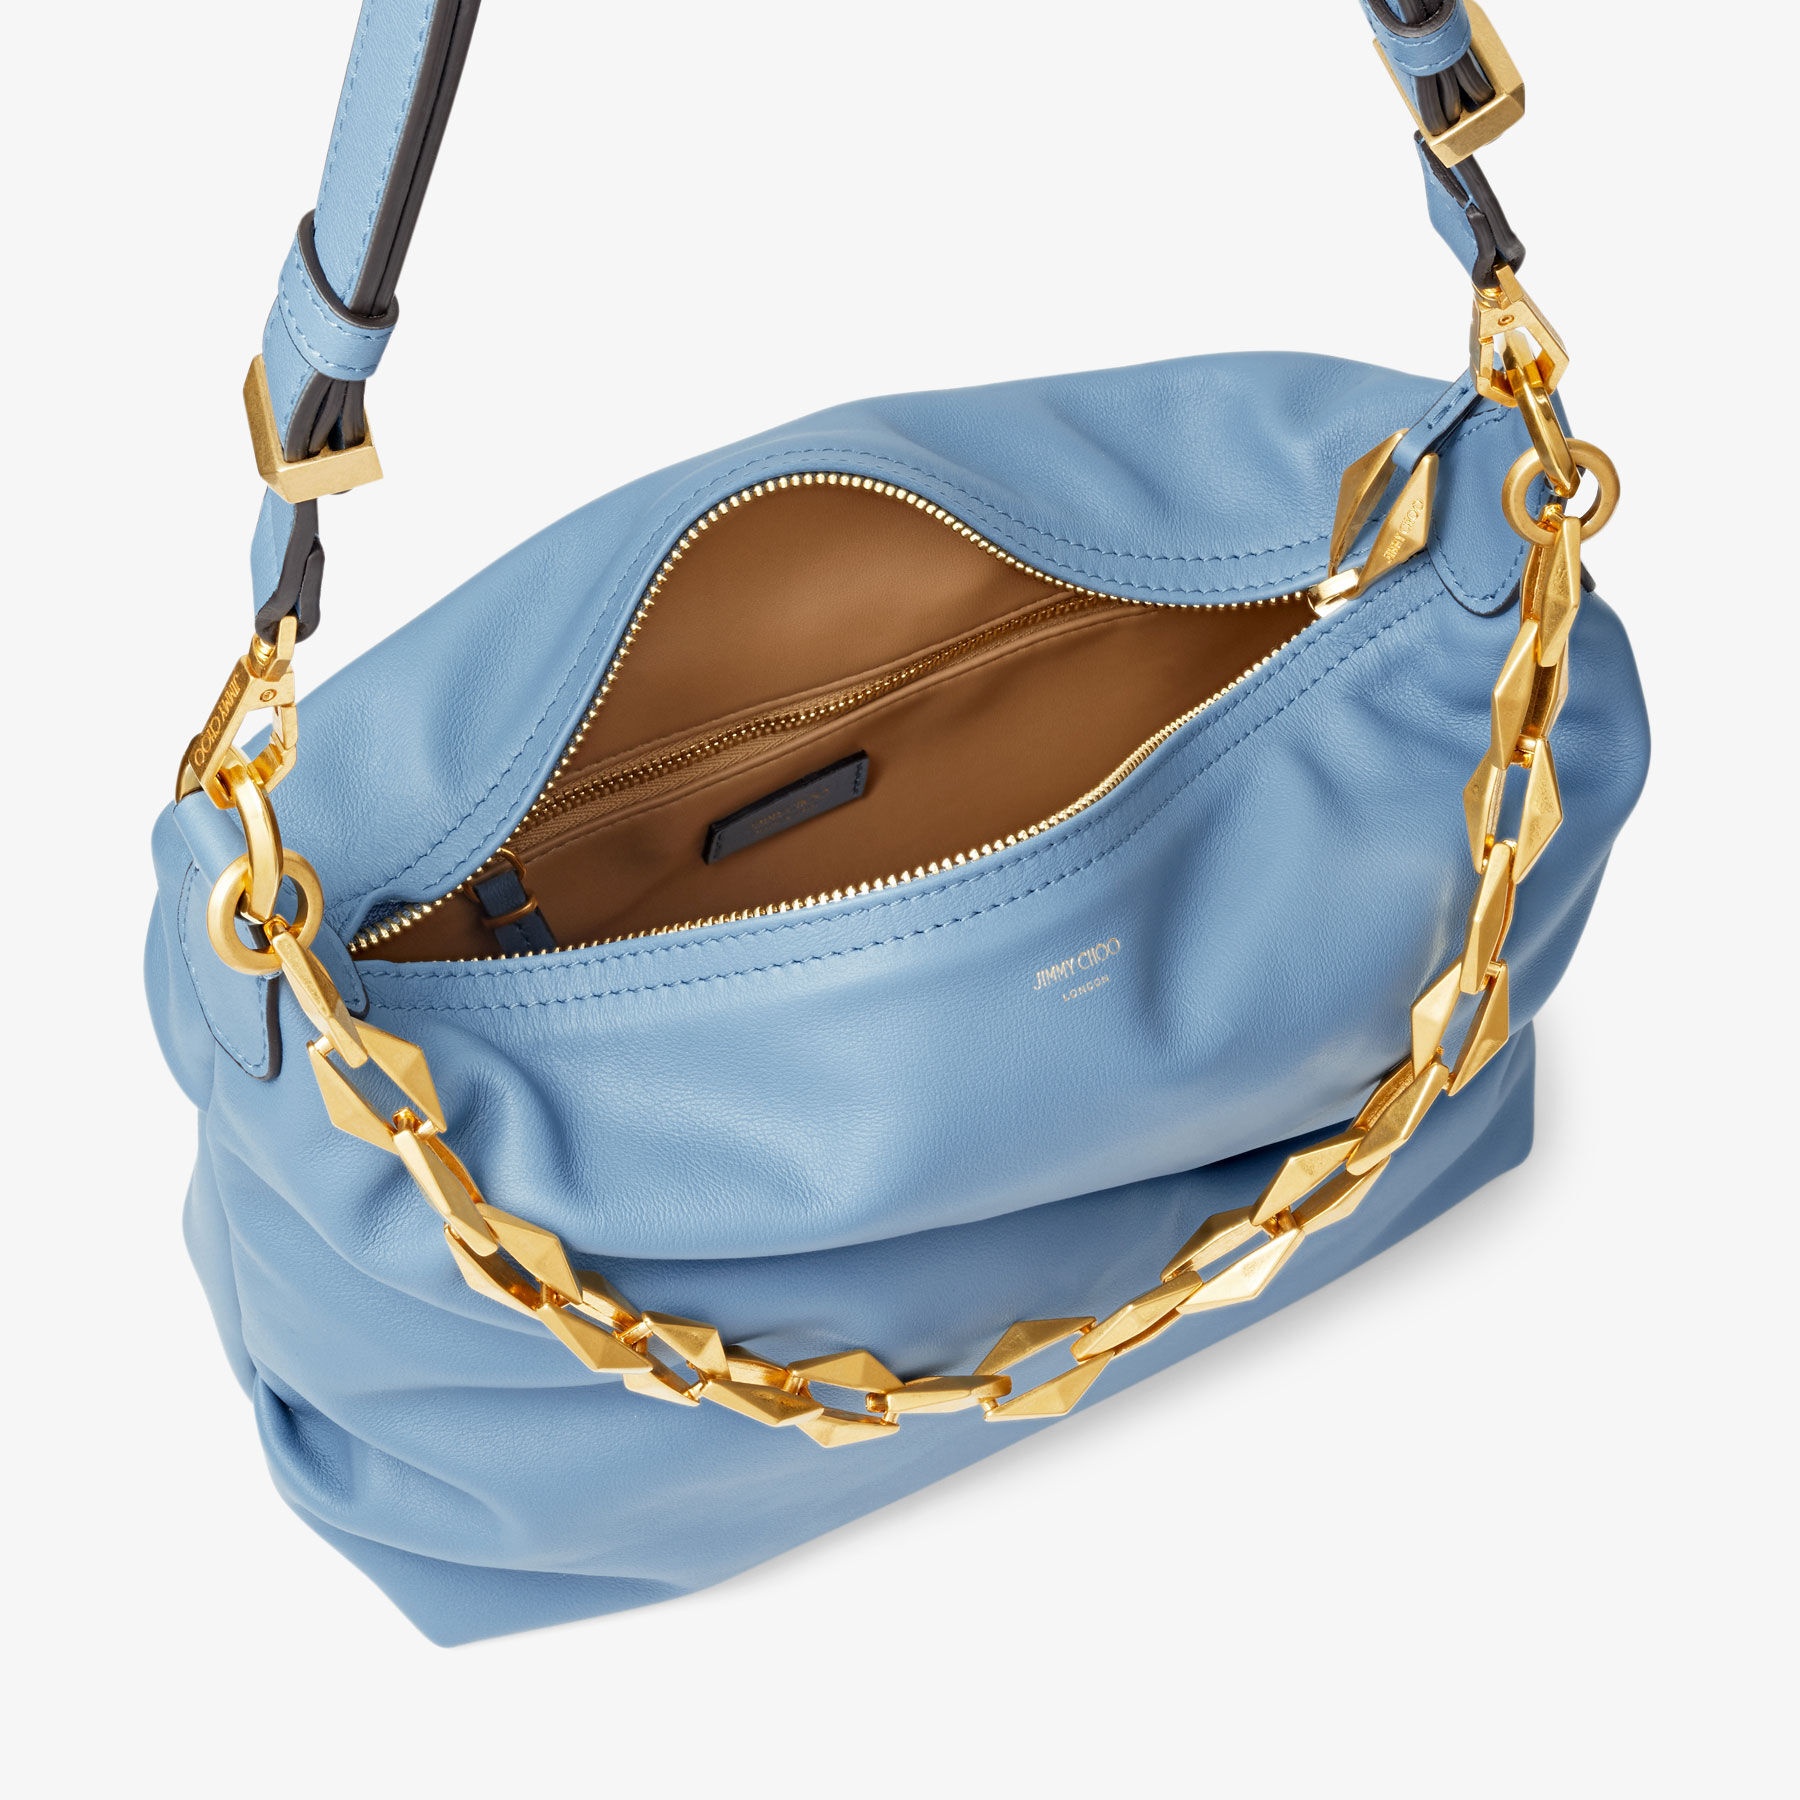 Diamond Soft Hobo S
Smoky Blue Soft Calf Leather Hobo Bag with Chain Strap - 5